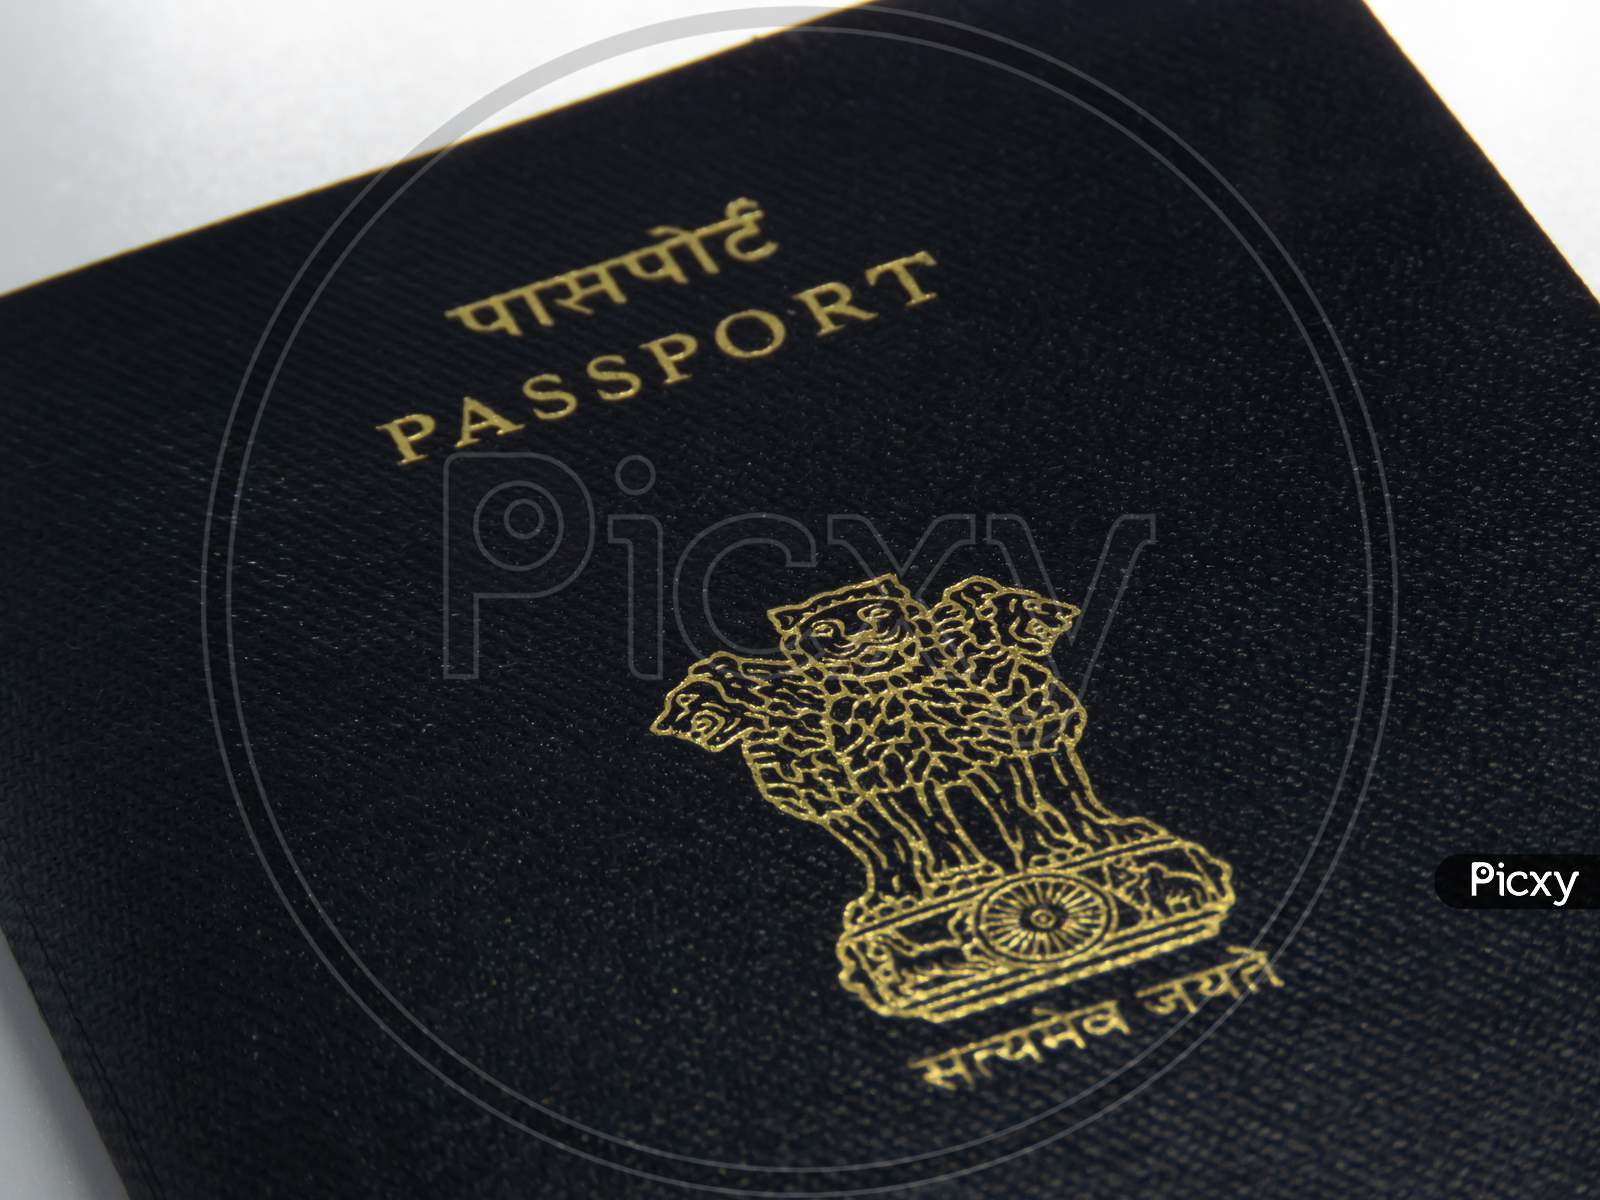 Image Of Indian Passport On White Desk.